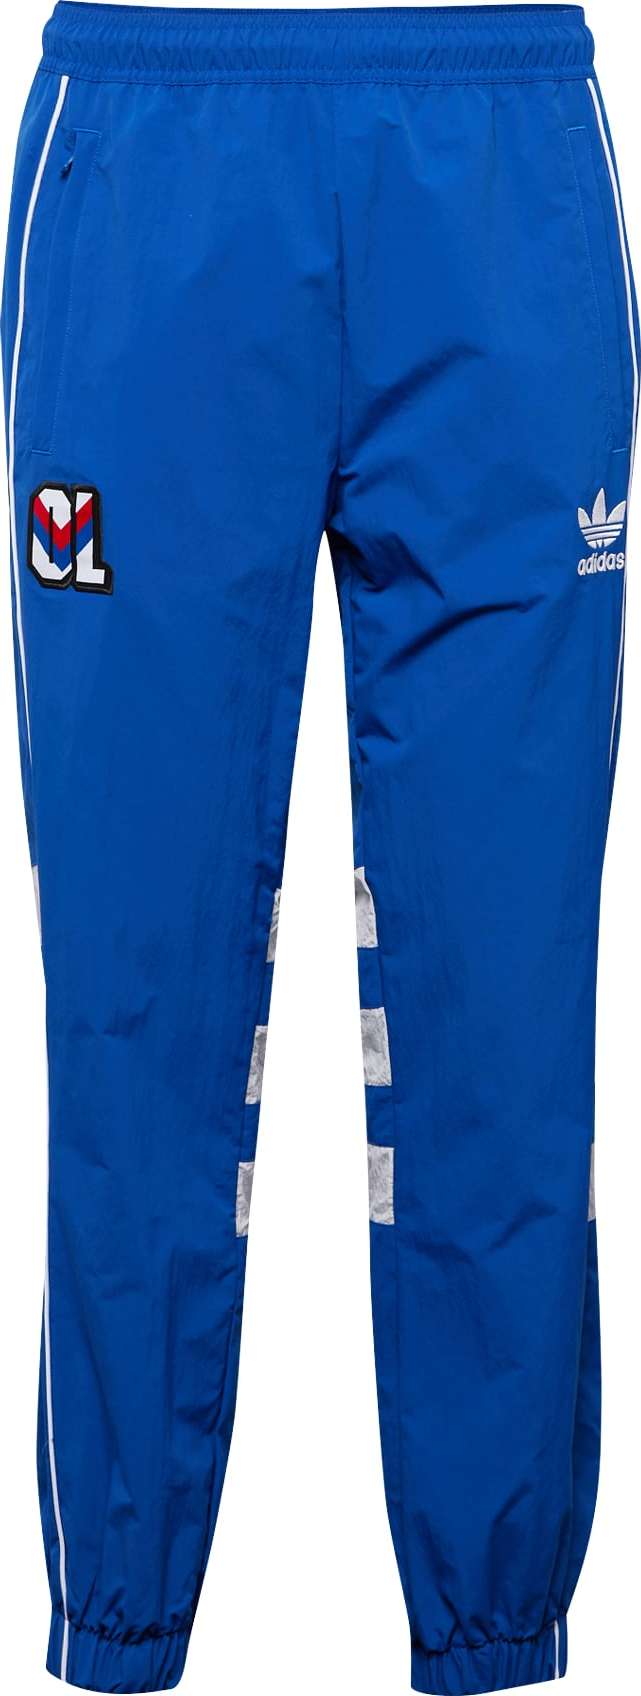 Sportovní kalhoty 'Olympique Lyonnais 95/96 ' adidas performance modrá / červená / bílá